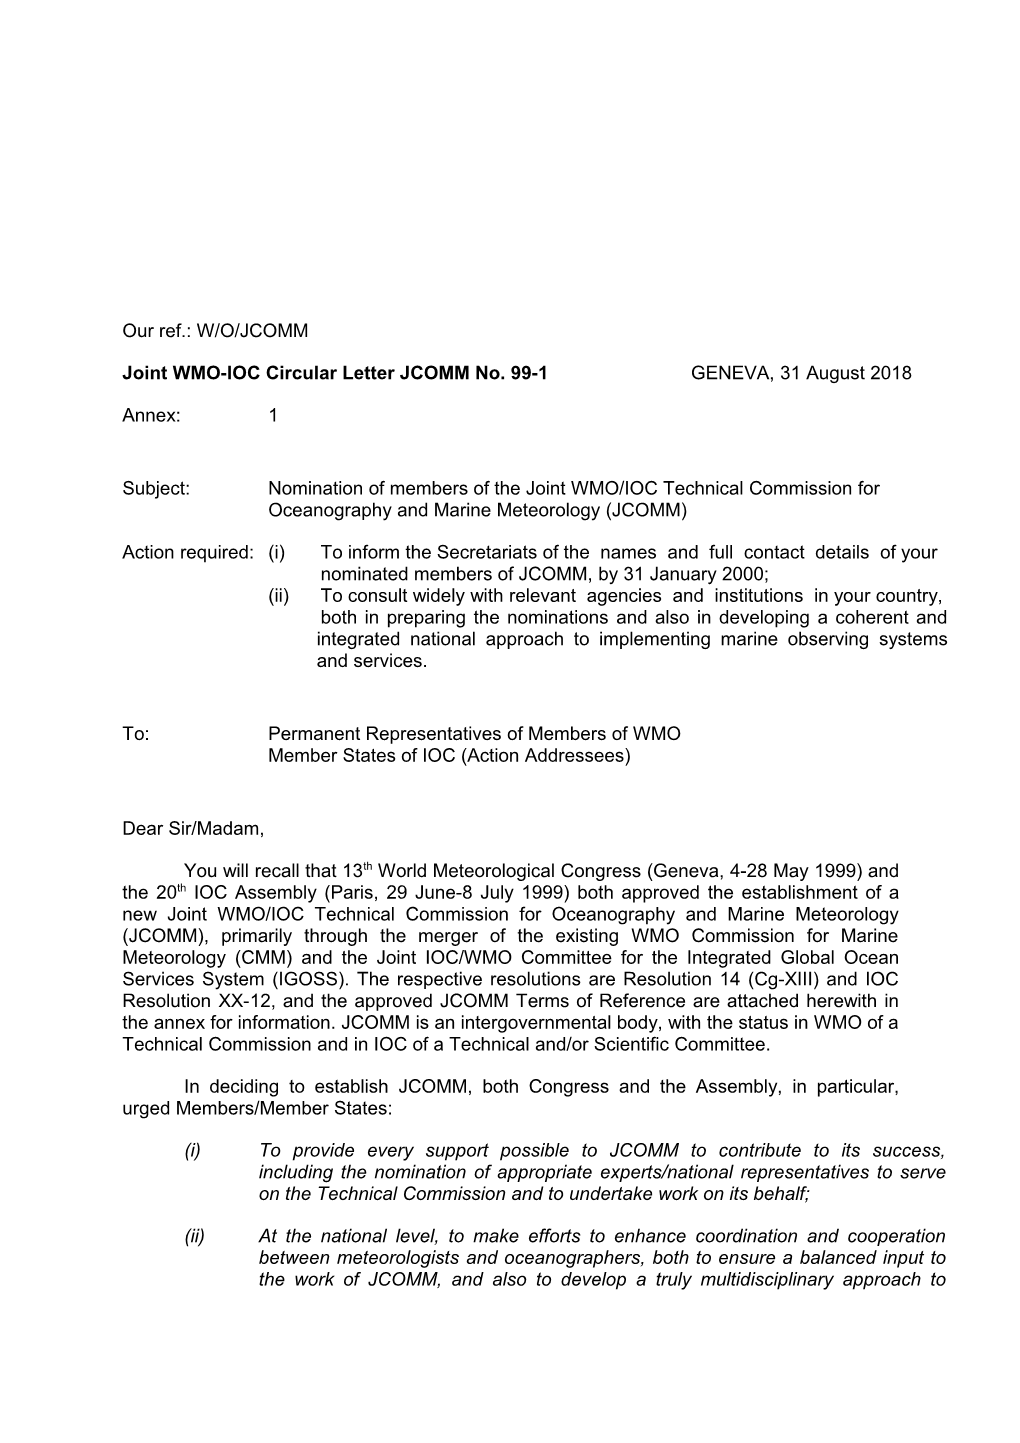 Joint WMO-IOC Circular Letter JCOMM No. 99-1 GENEVA, 22 October 1999